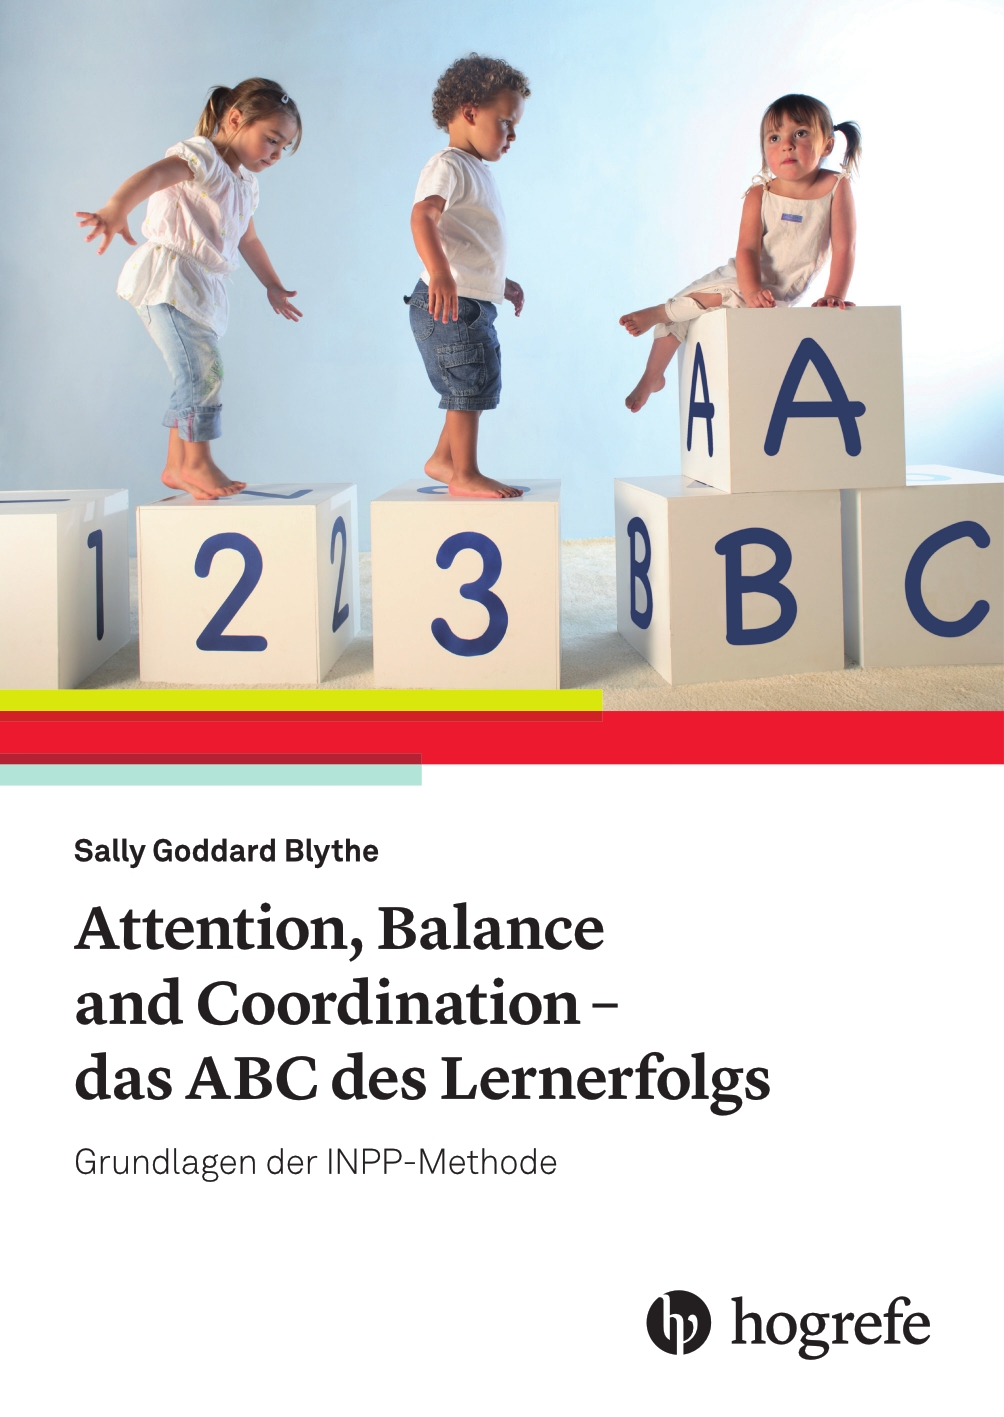 Buchcover Attention, Balance and Coordination, hogrefe Verlag